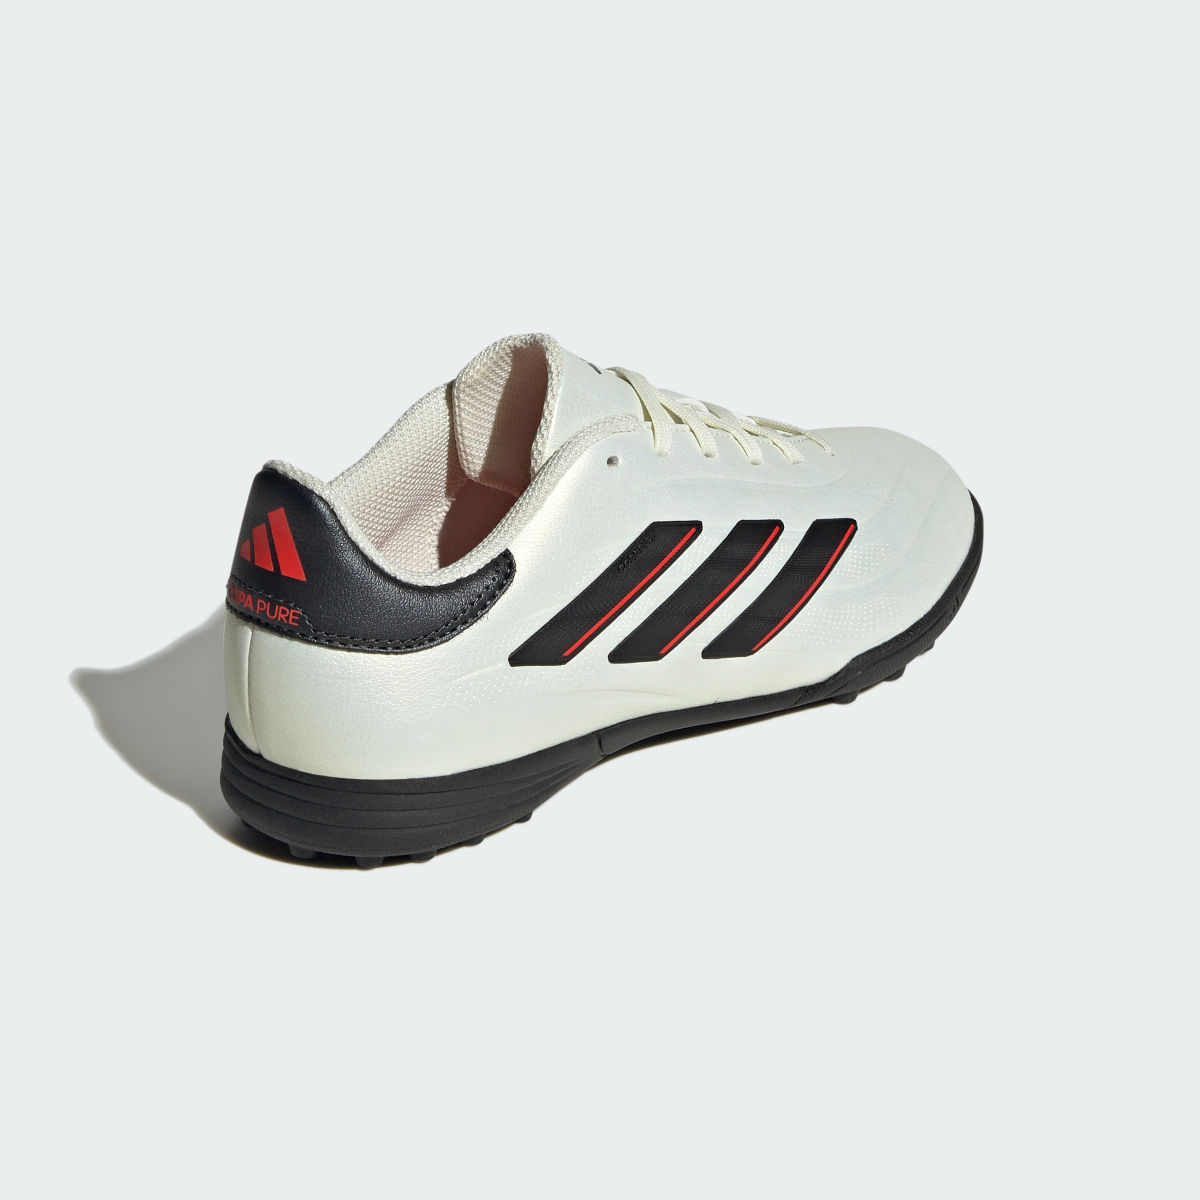 Adidas Copa Pure II League Turf Boots. 6